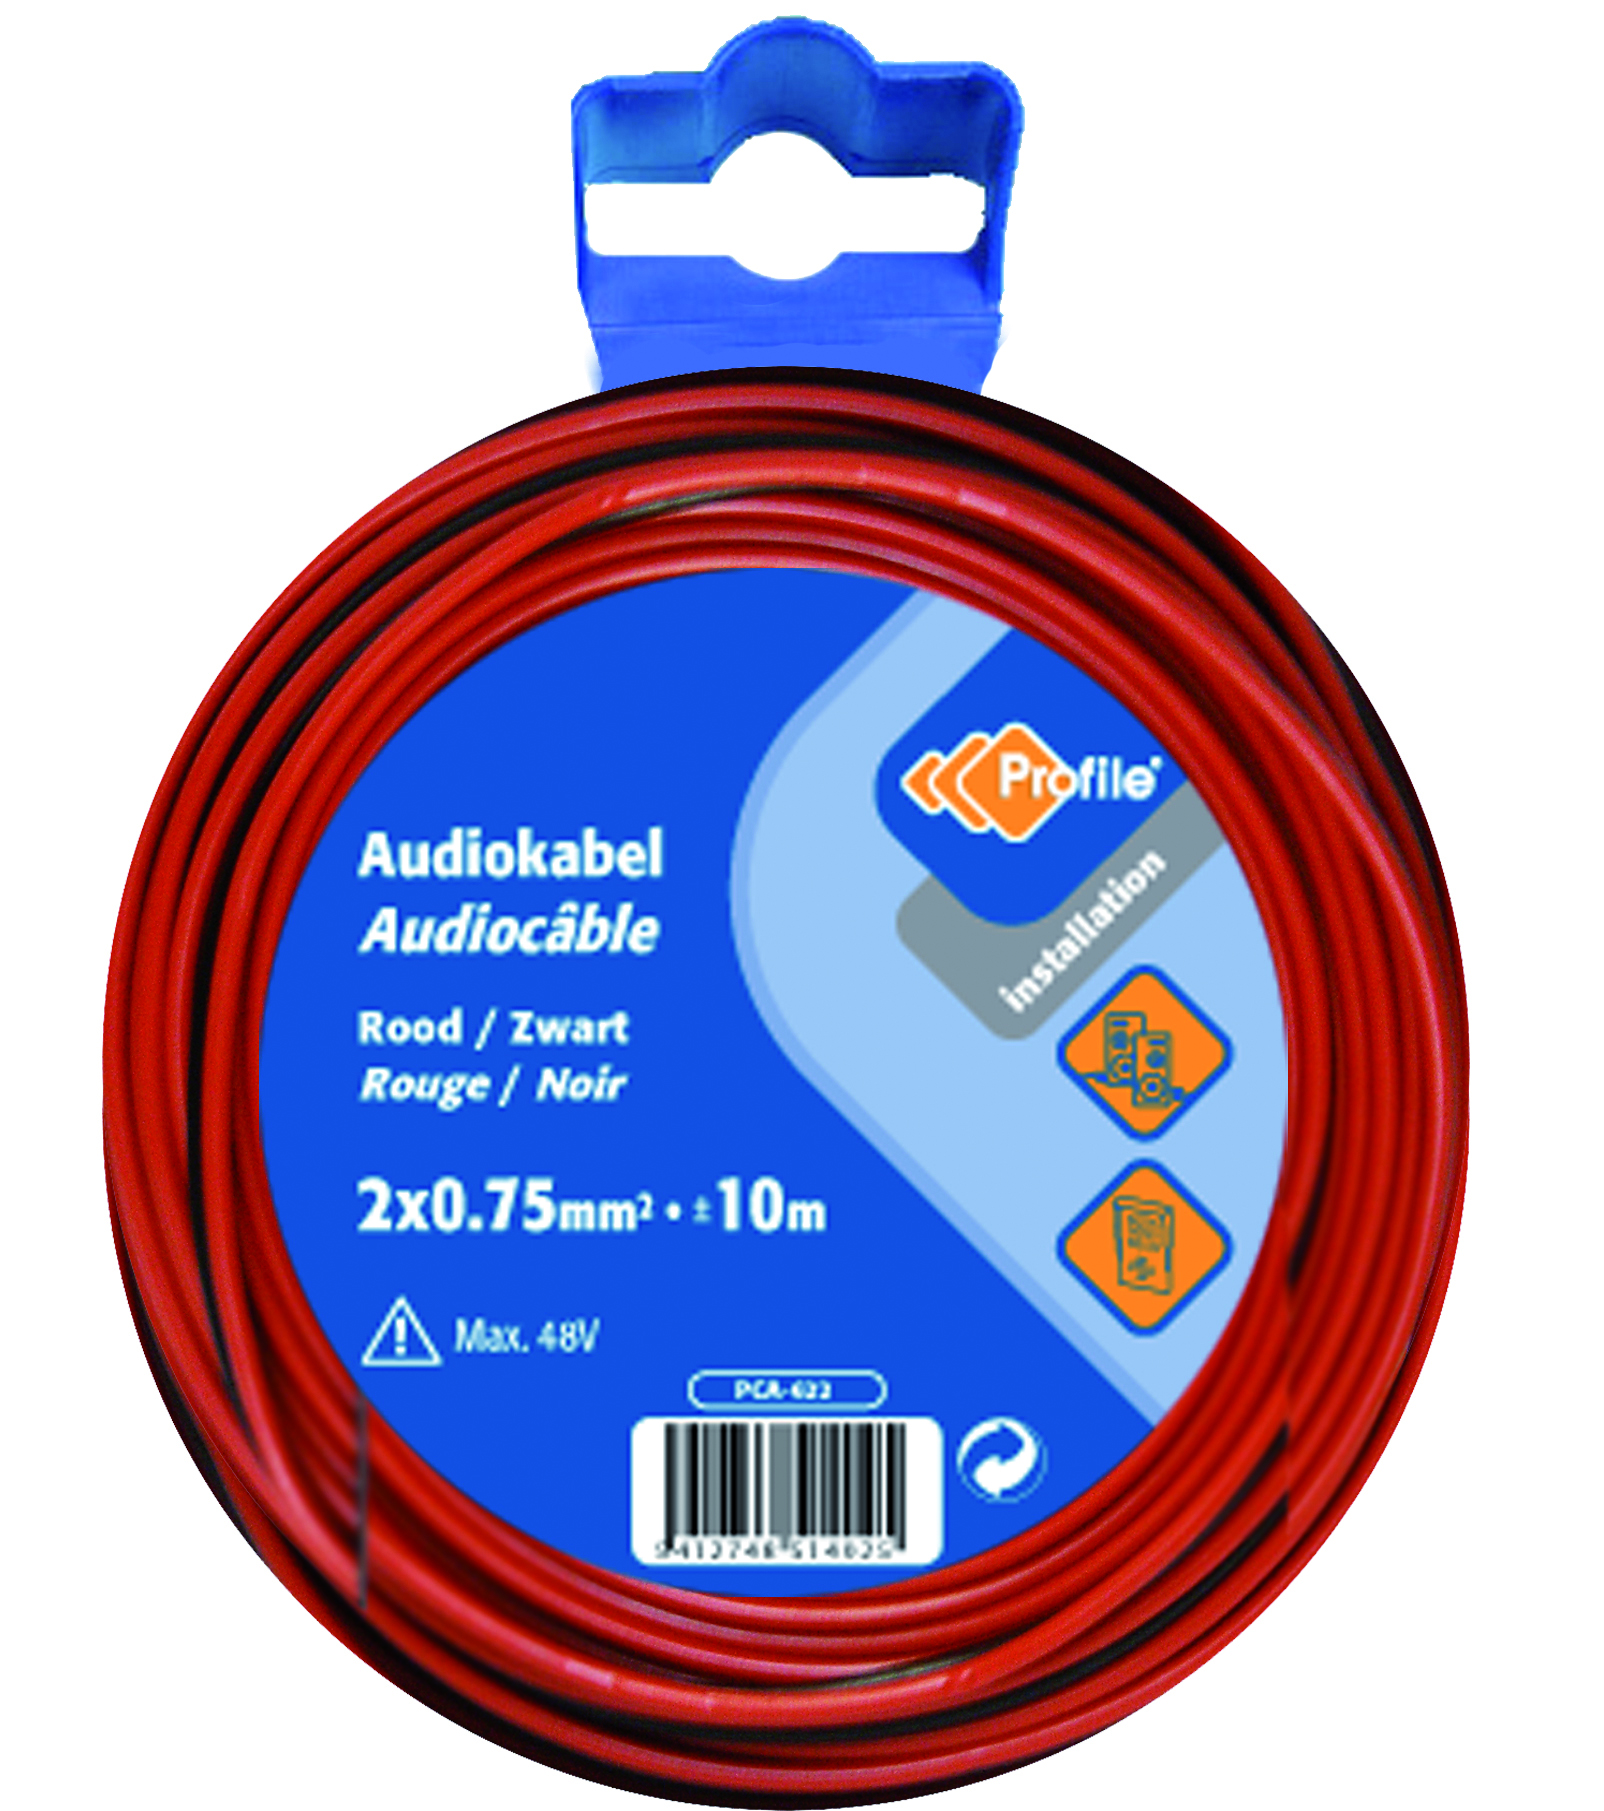 Audiokabel 2x0.75mm² Rood/zwart 10m